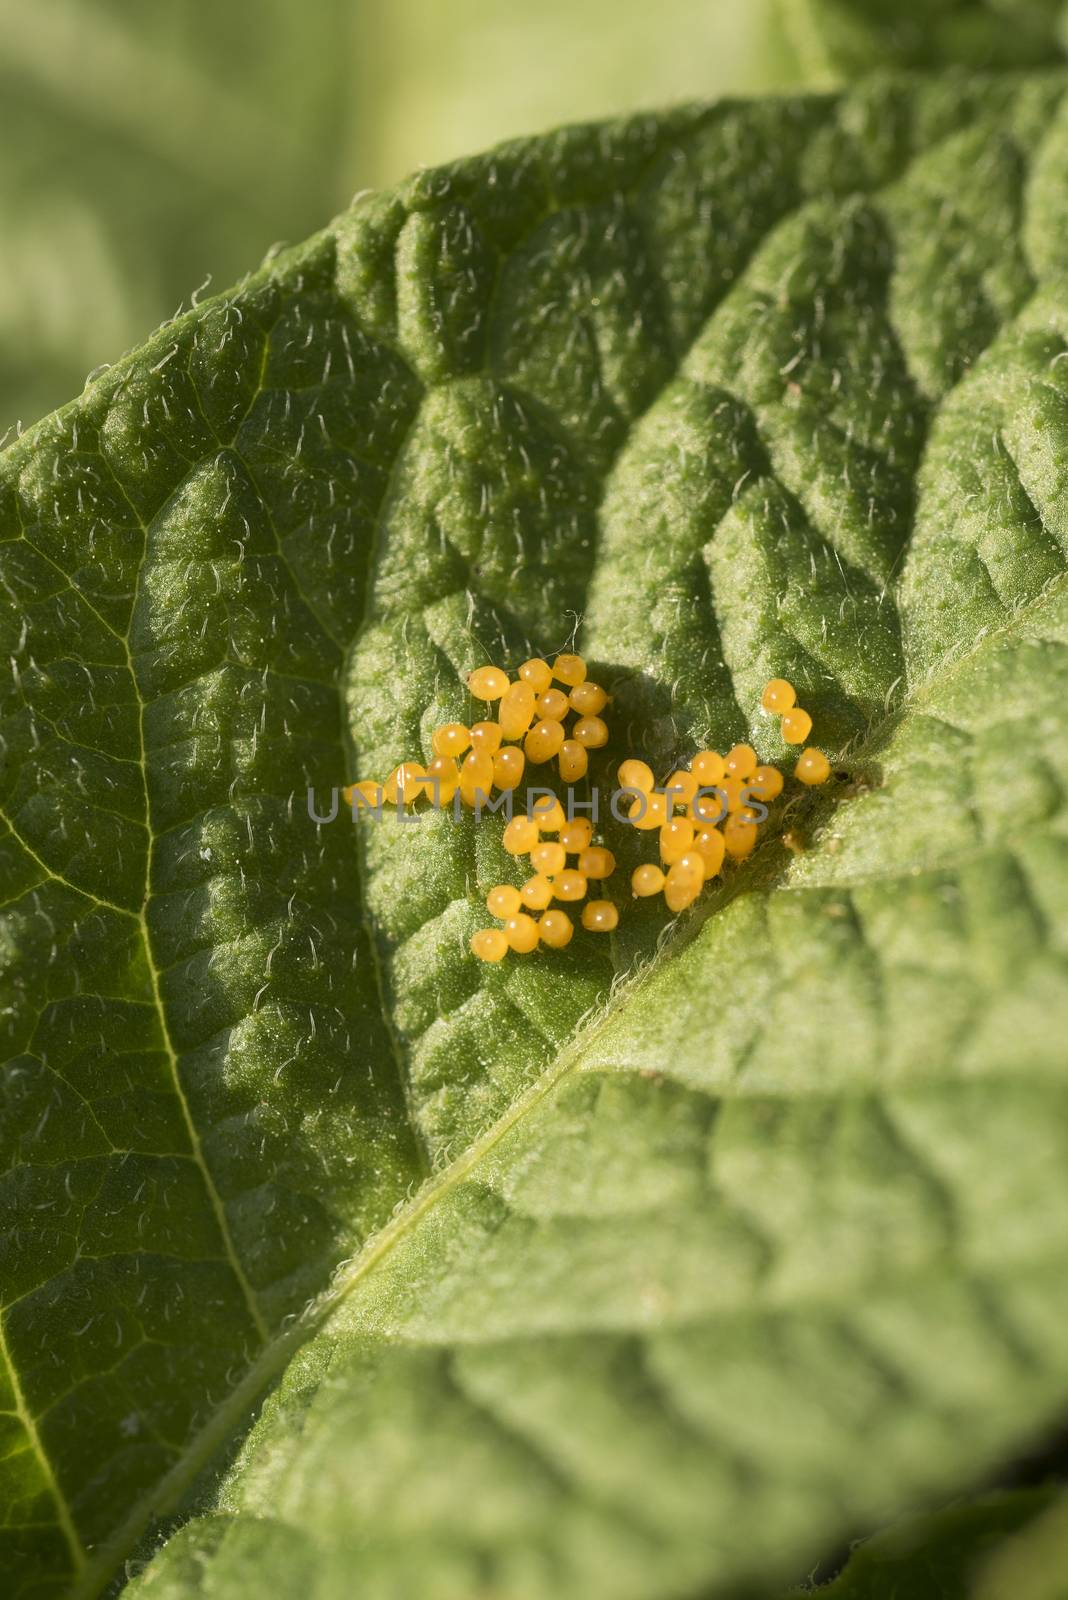 Colorado potato beetle eggs eat potato leaves, Leptinotarsa dece by jalonsohu@gmail.com